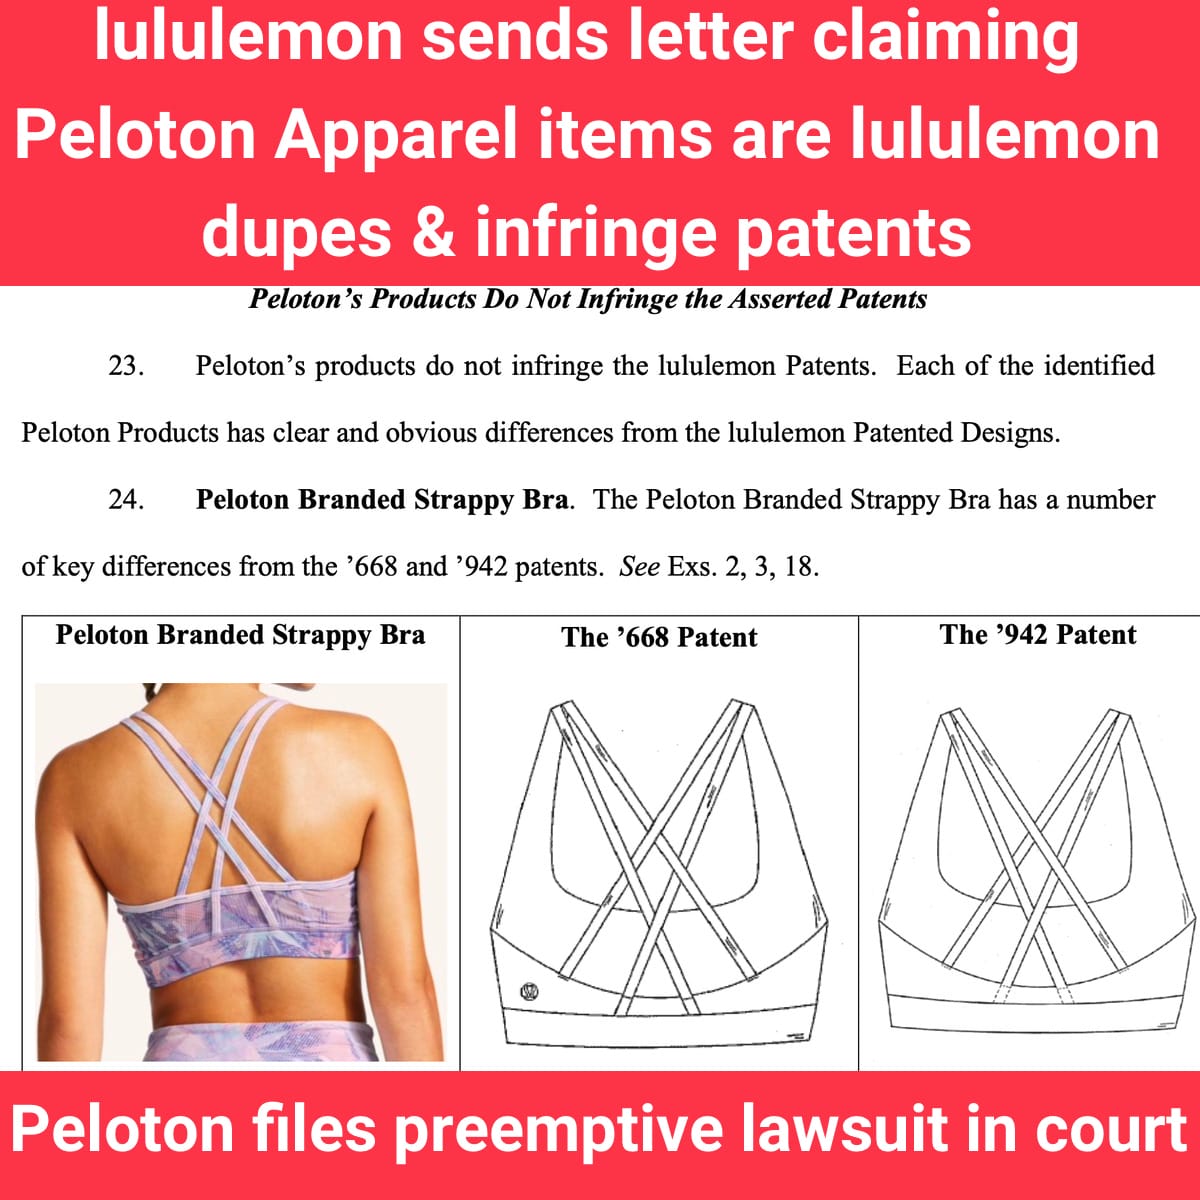 lululemon claims Peloton Apparel collection contains lululemon dupes &  infringes on patents; Peloton countersues - Peloton Buddy